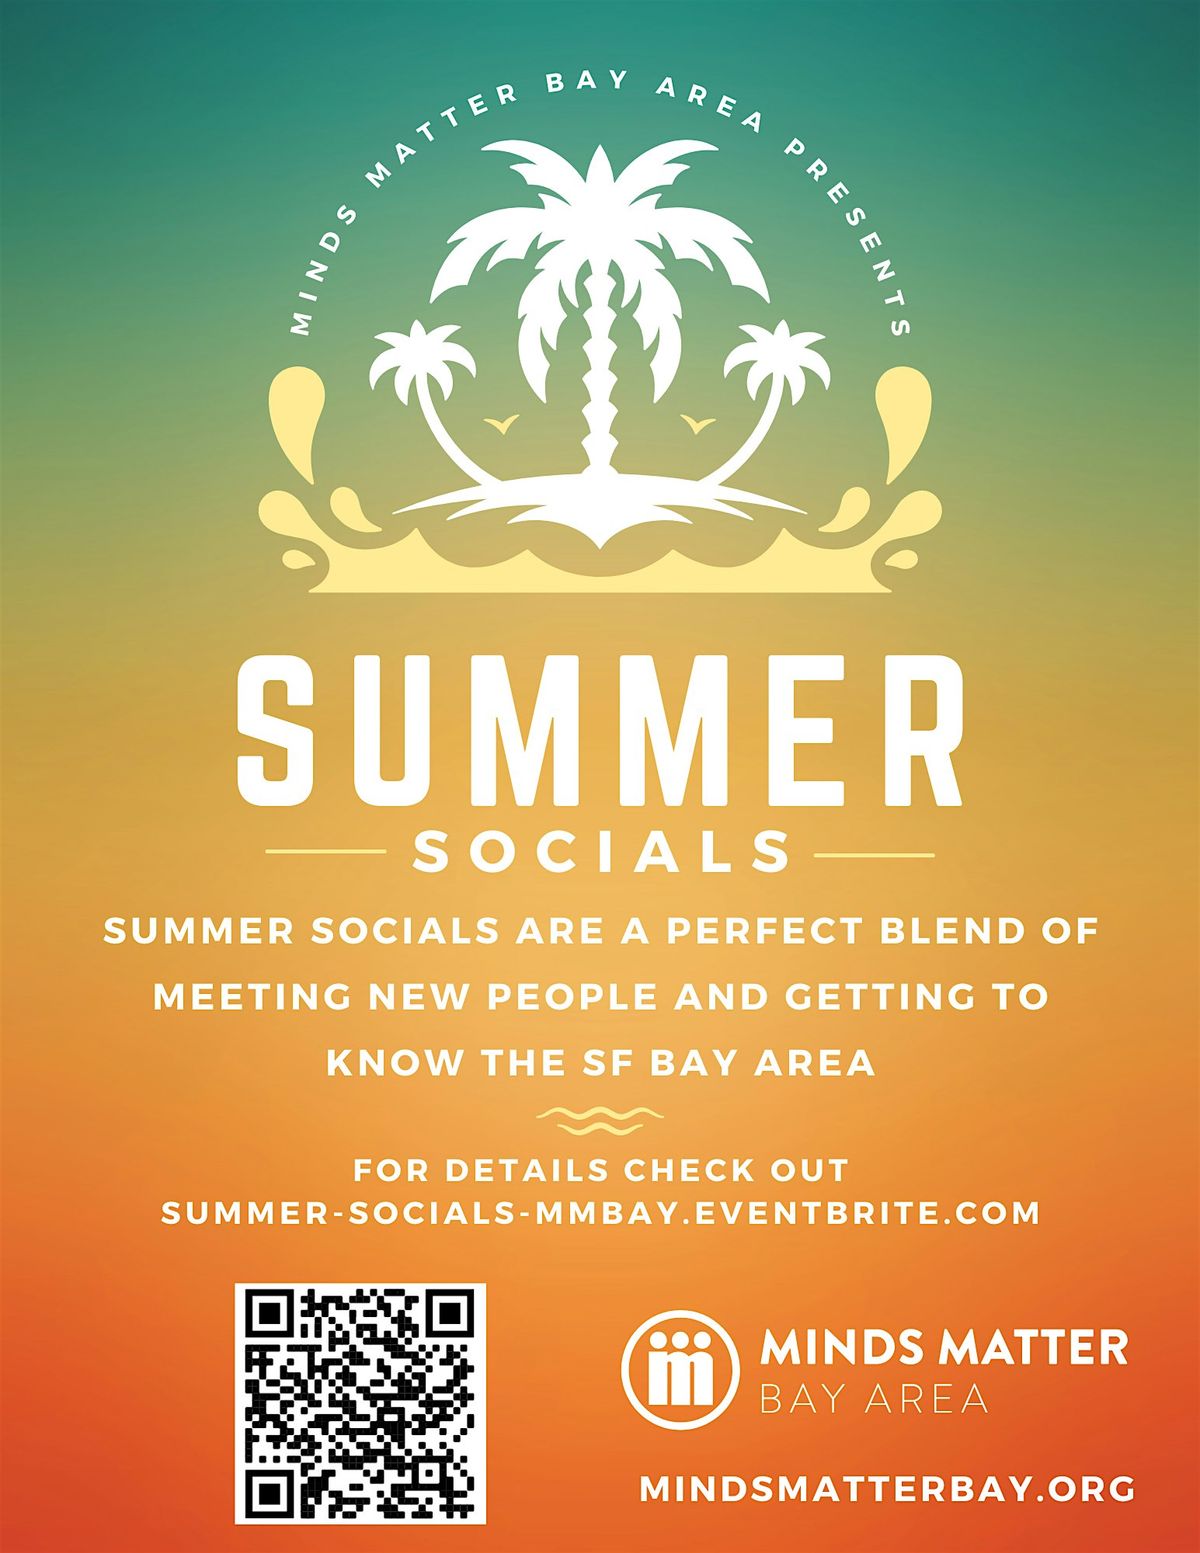 Summer Socials - Sunny Day @ Hapa's Brewery in SJ